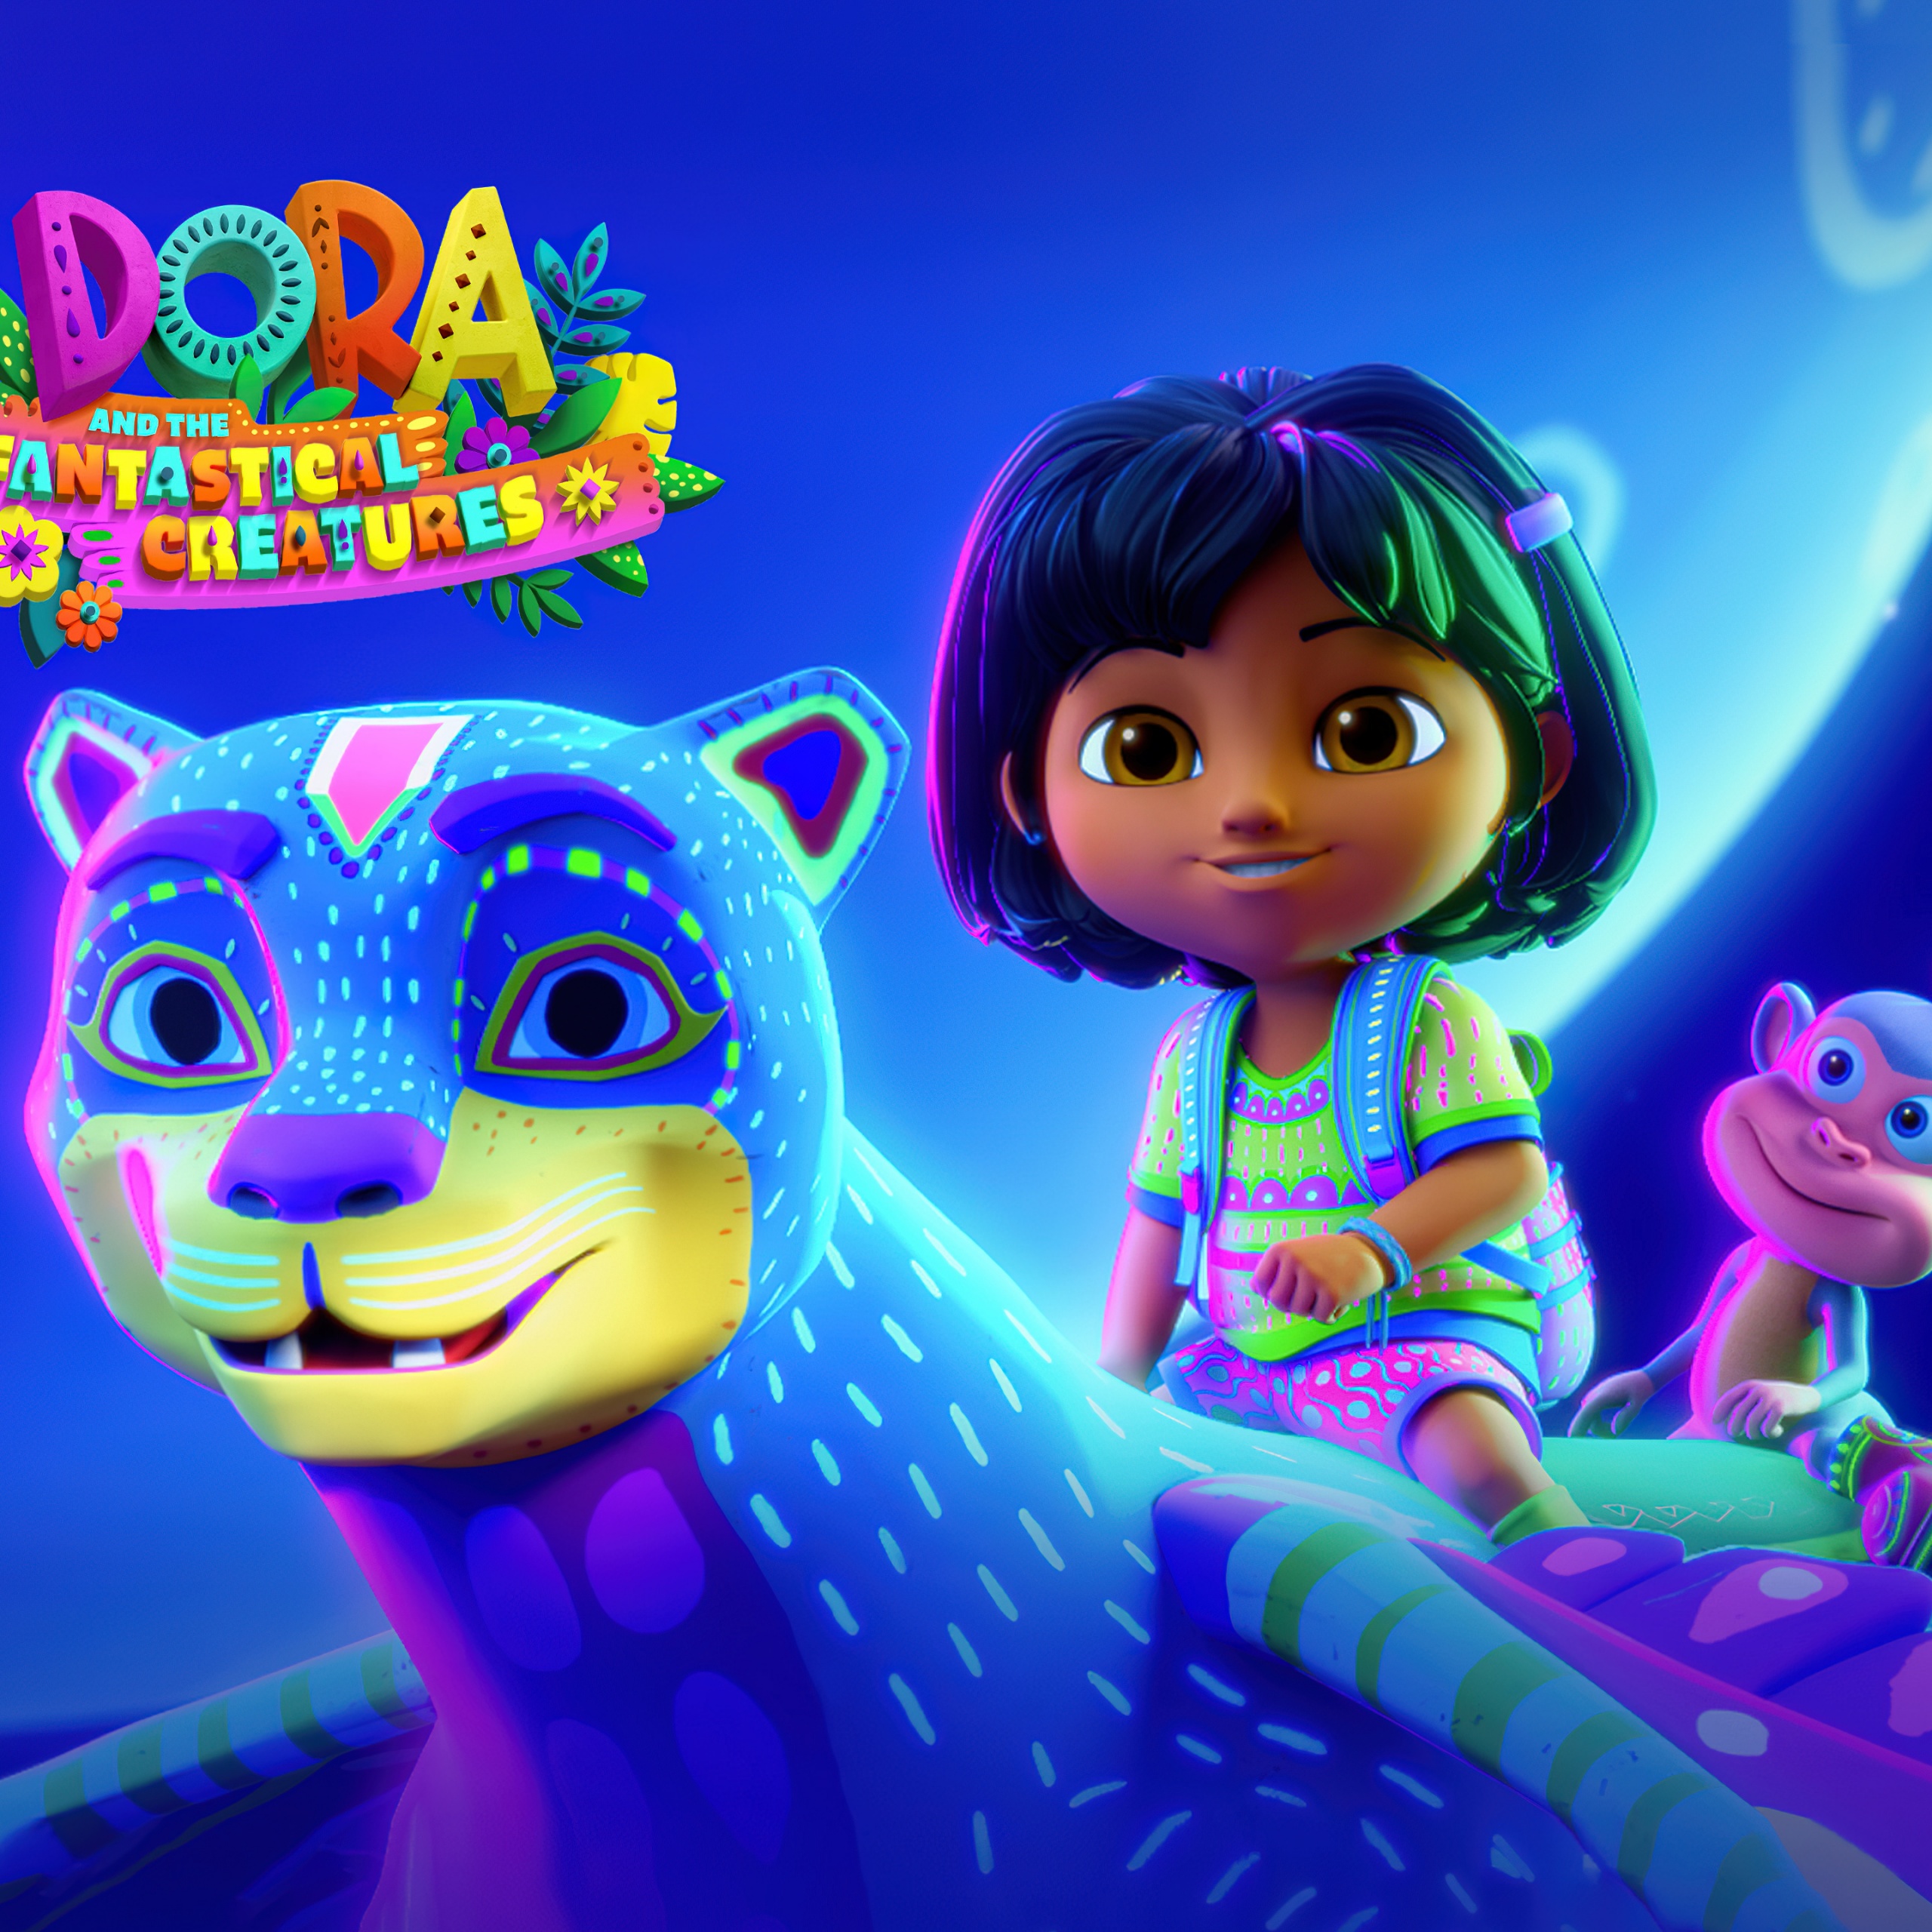 Dora and the Fantastical Creatures Wallpaper 4K, Animation, 5K